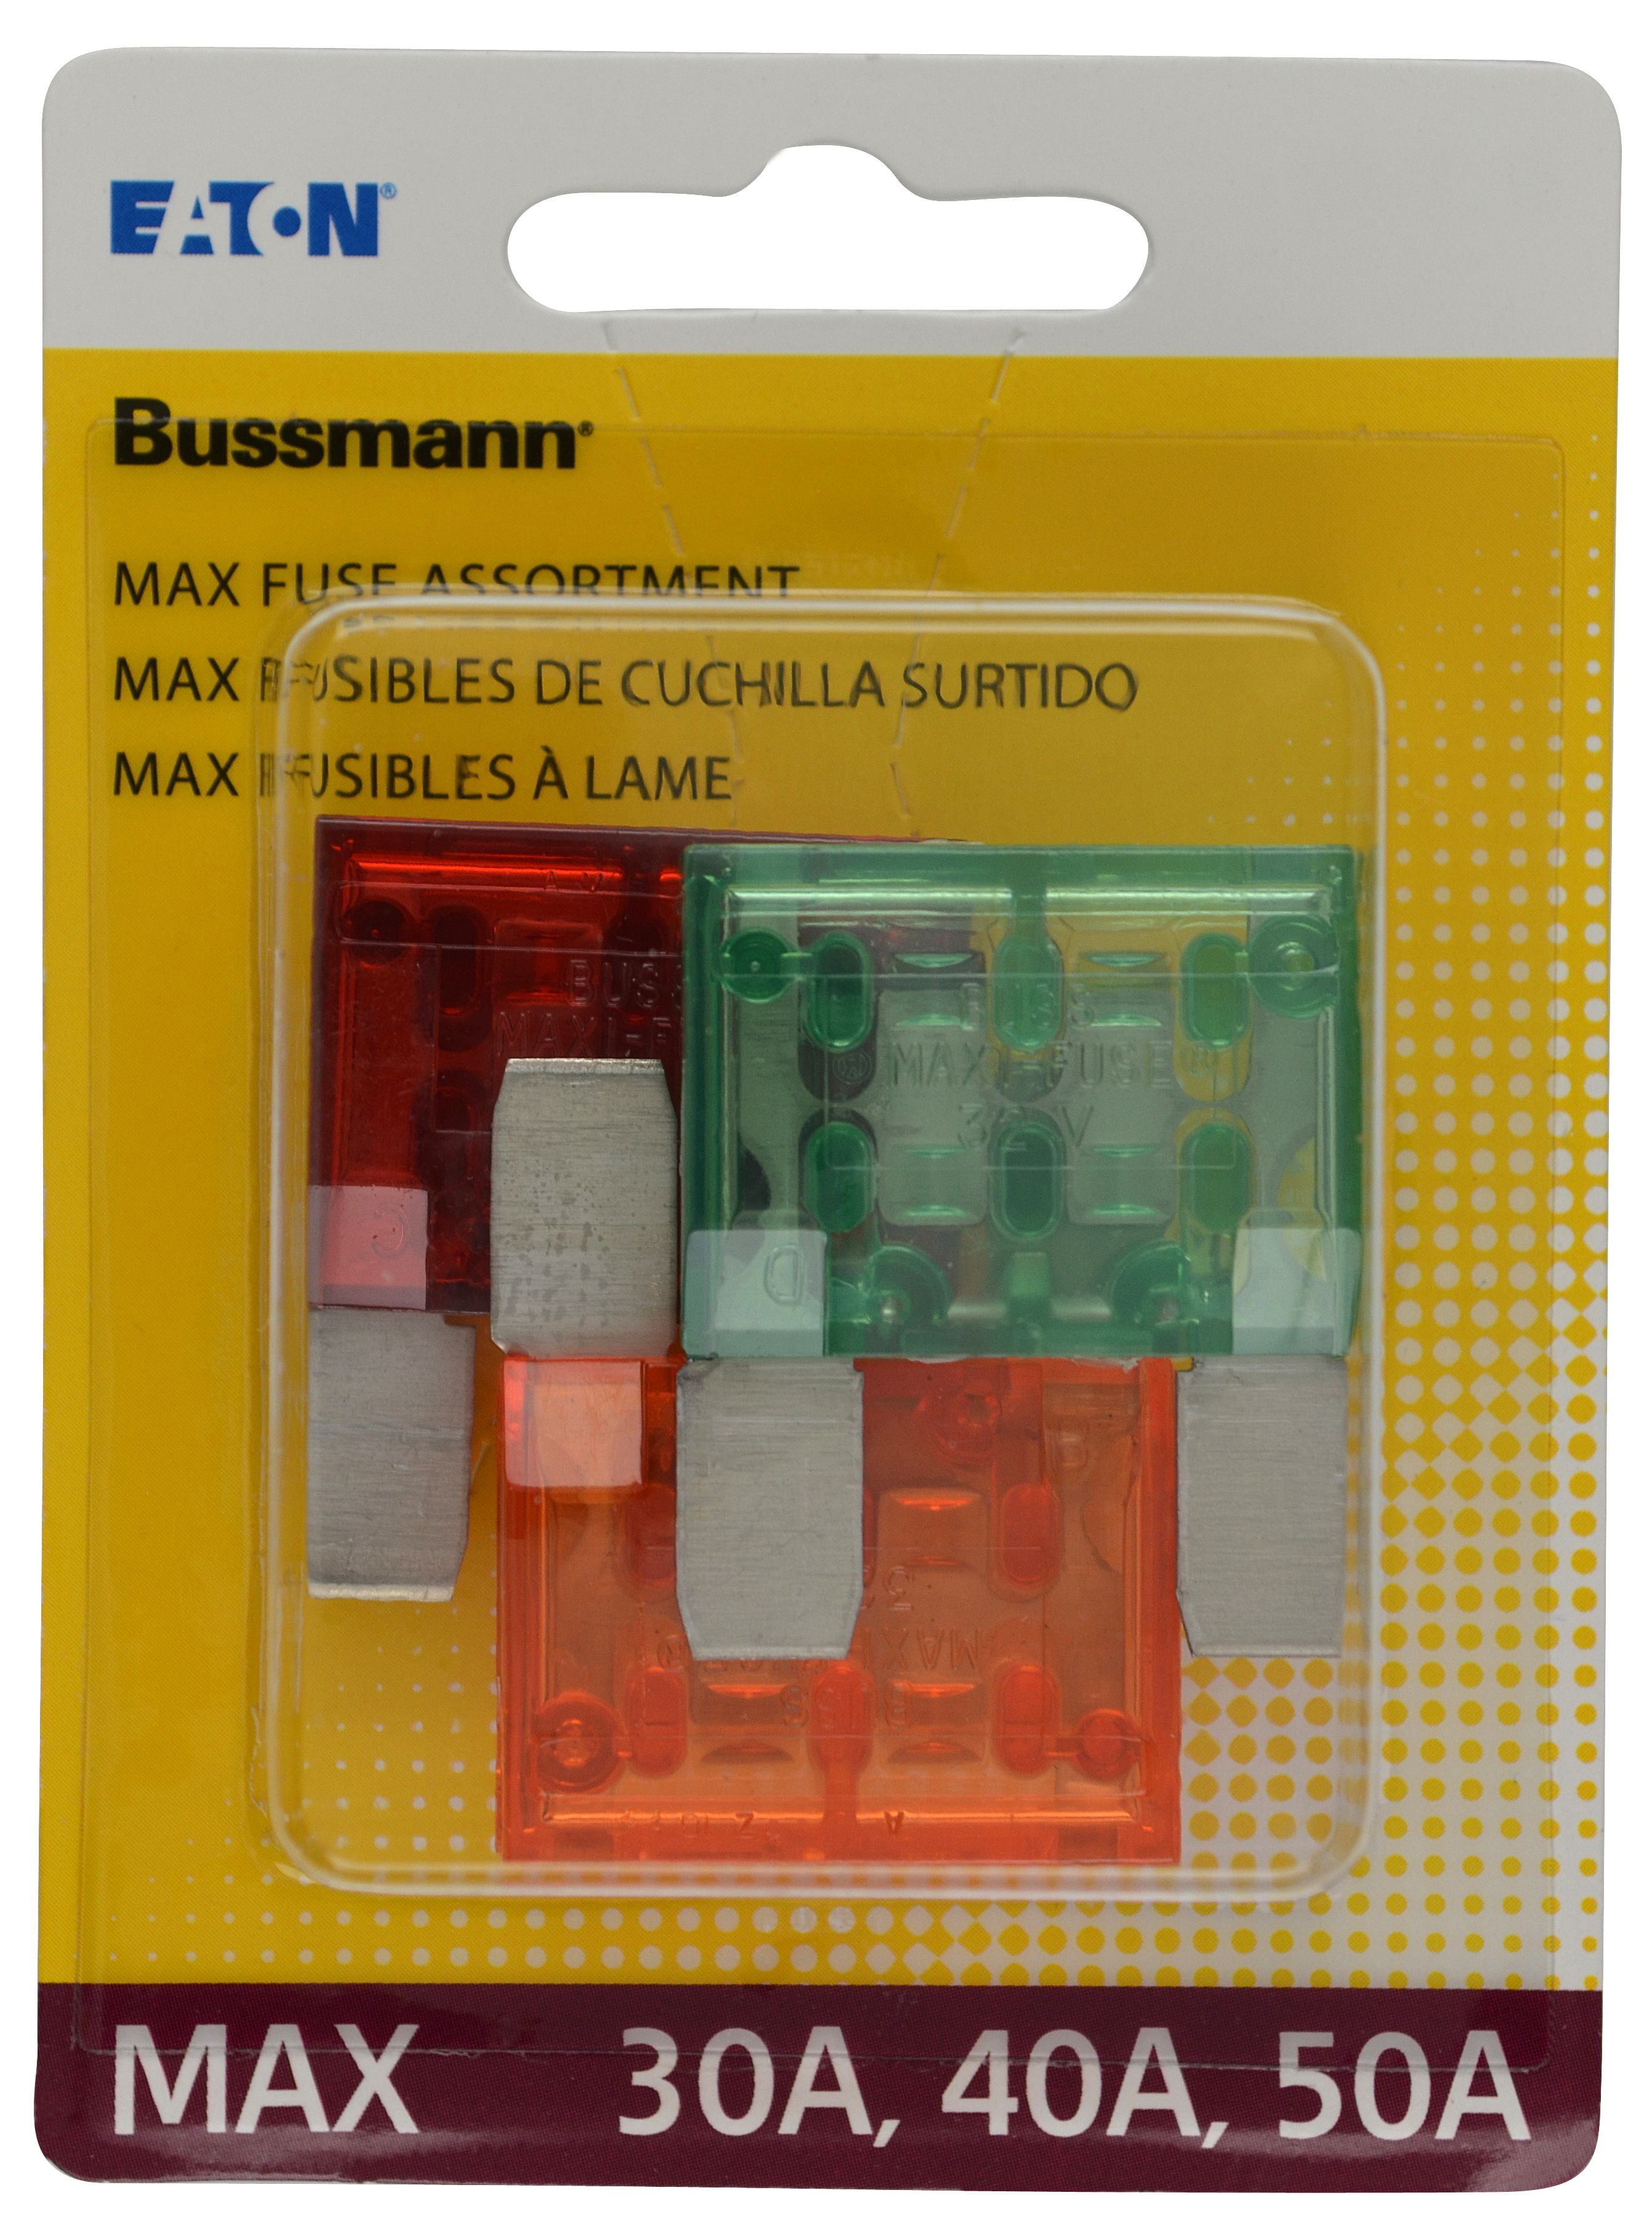 1 Fuse per Box NEW MAX 60 1 Box of Each MAX 50 MAX 40 Buss Fuse Set: MAX 20 